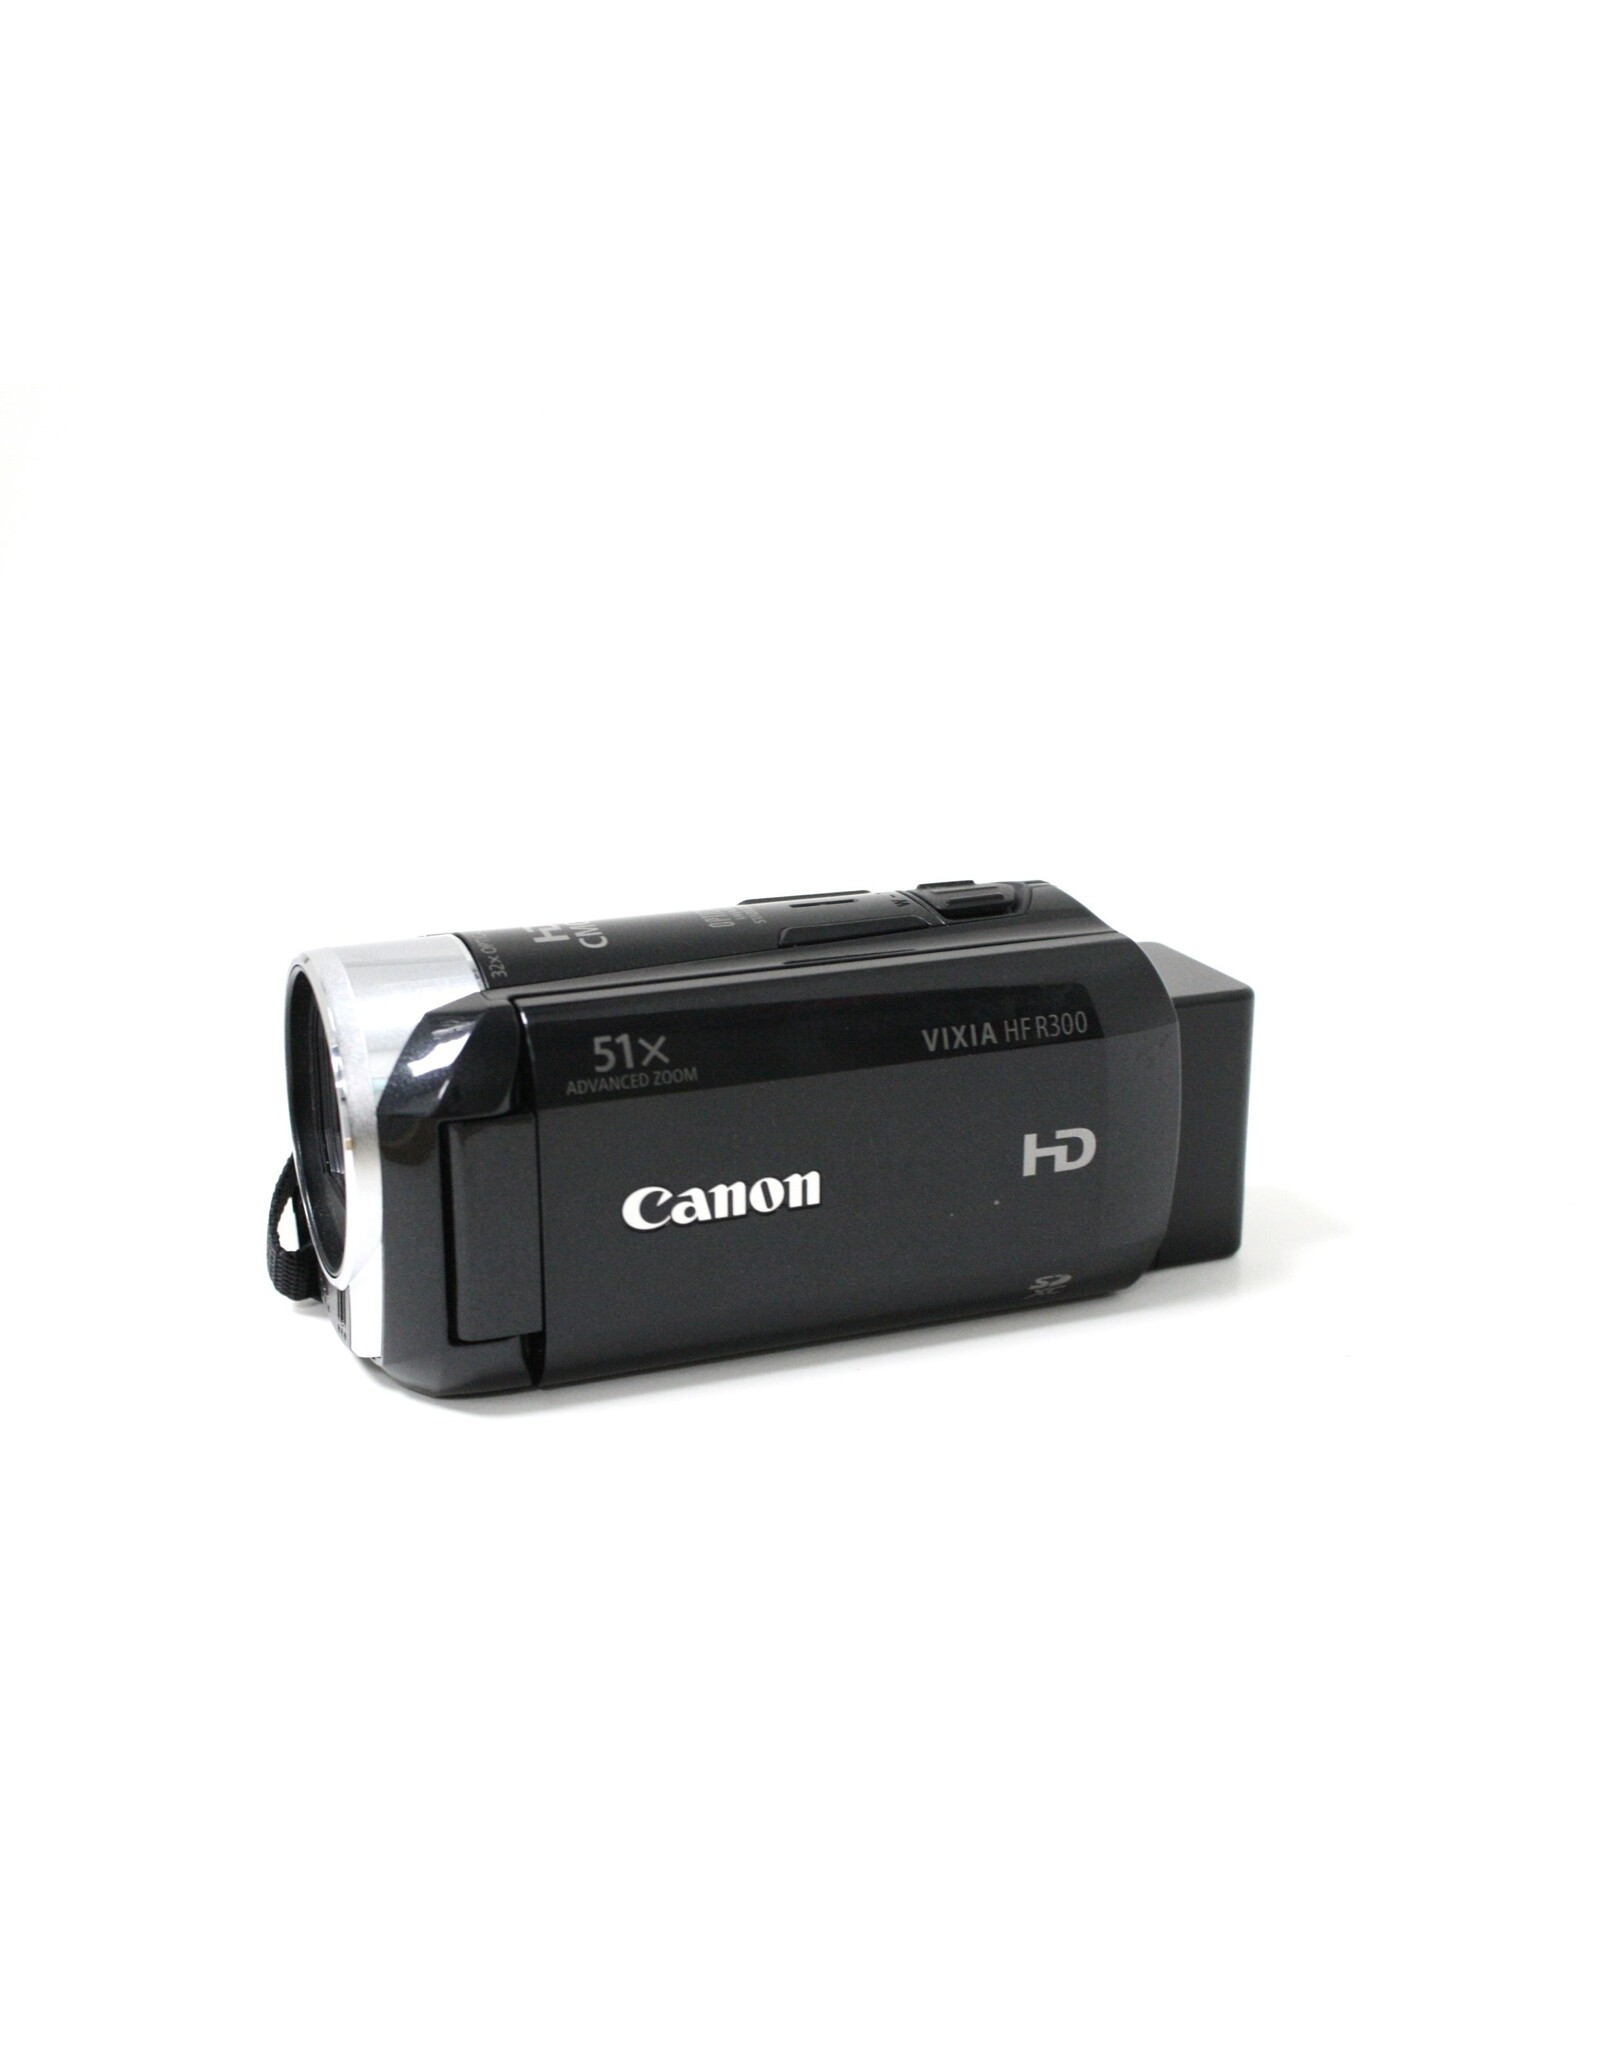 Canon Vixia HFR300